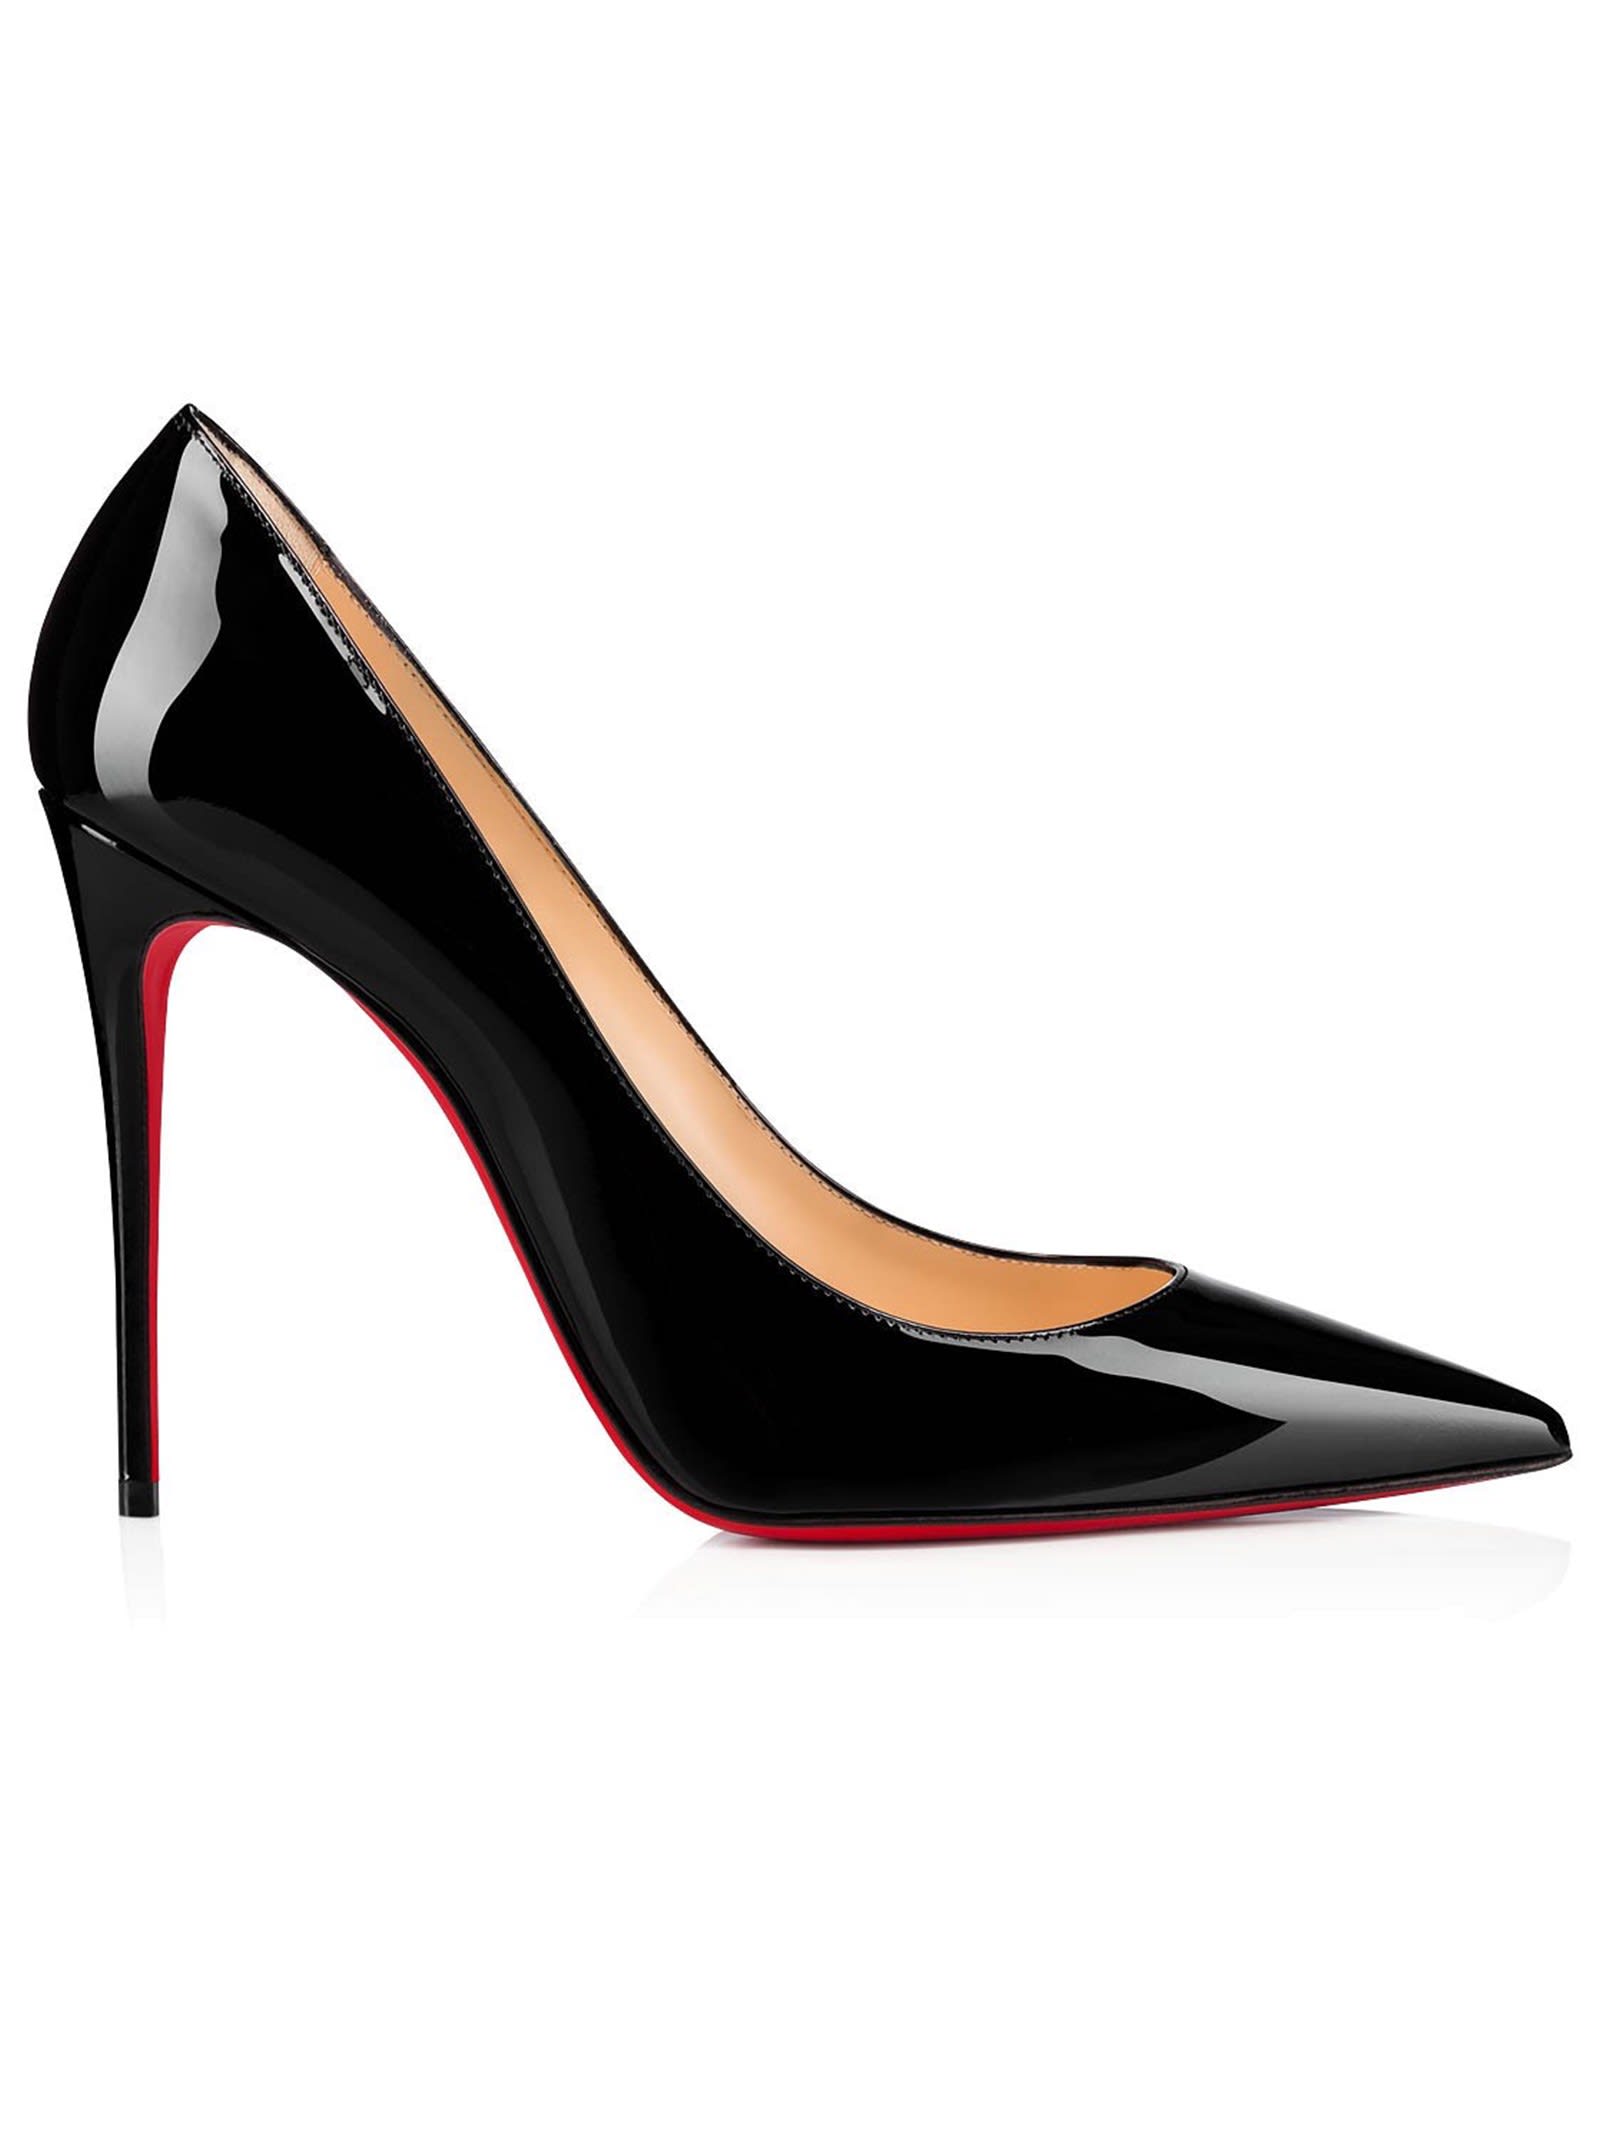 Buy Christian Louboutin Black Patent Kate 100 Pumps online, shop Christian Louboutin shoes with free shipping